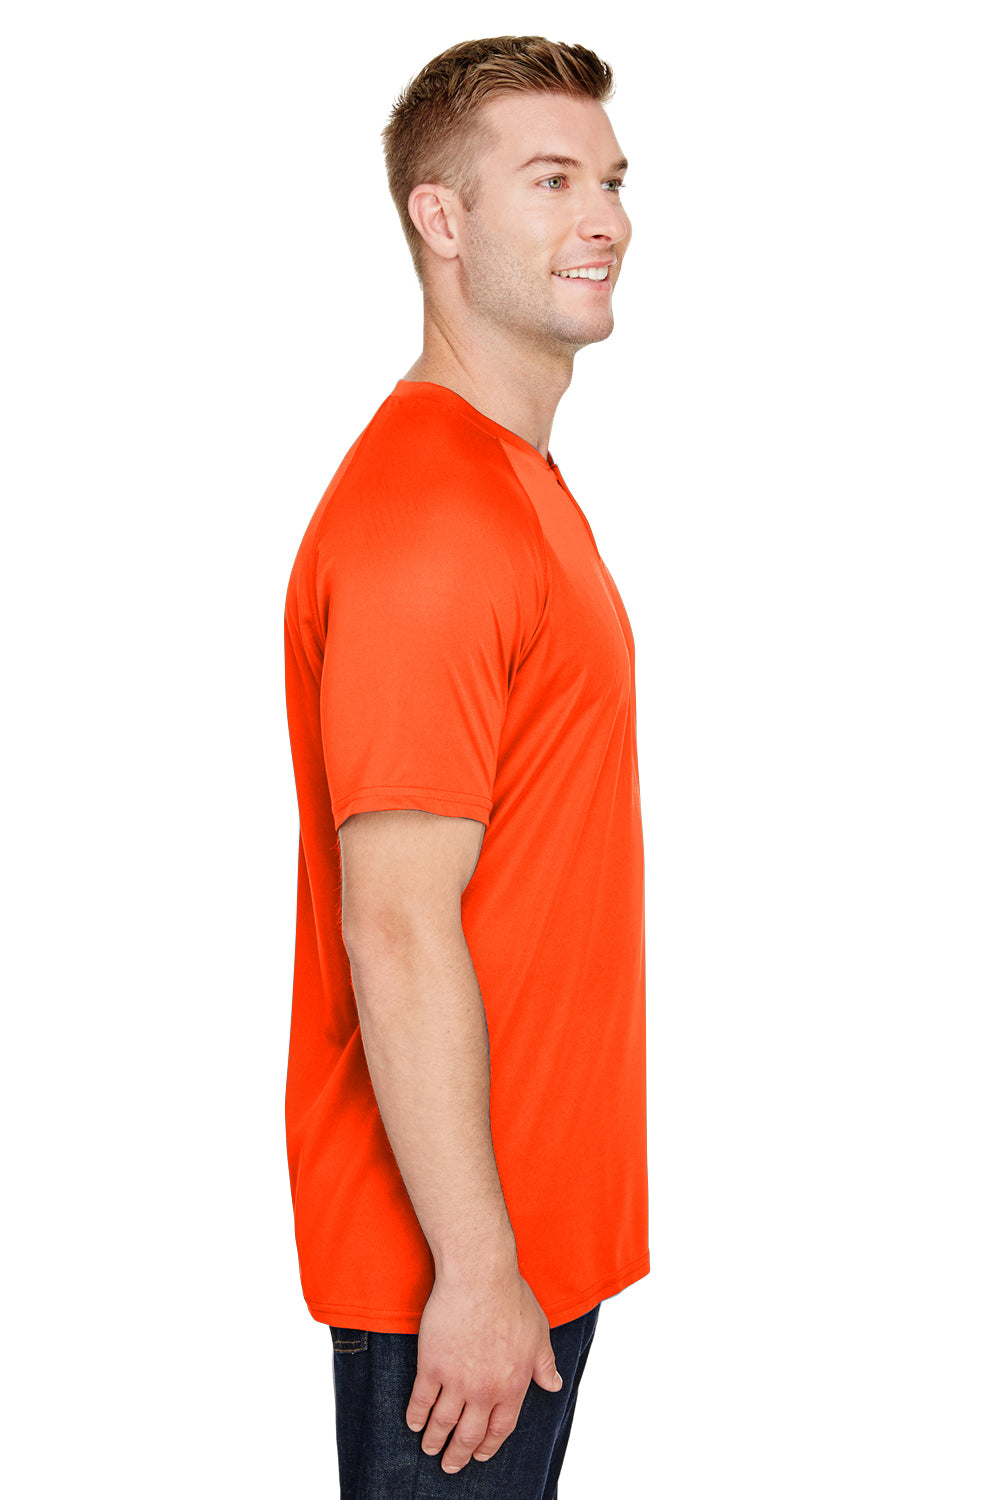 Augusta Sportswear AG1565 Mens Attain 2 Moisture Wicking Button Short Sleeve Baseball Jersey Orange Model Side